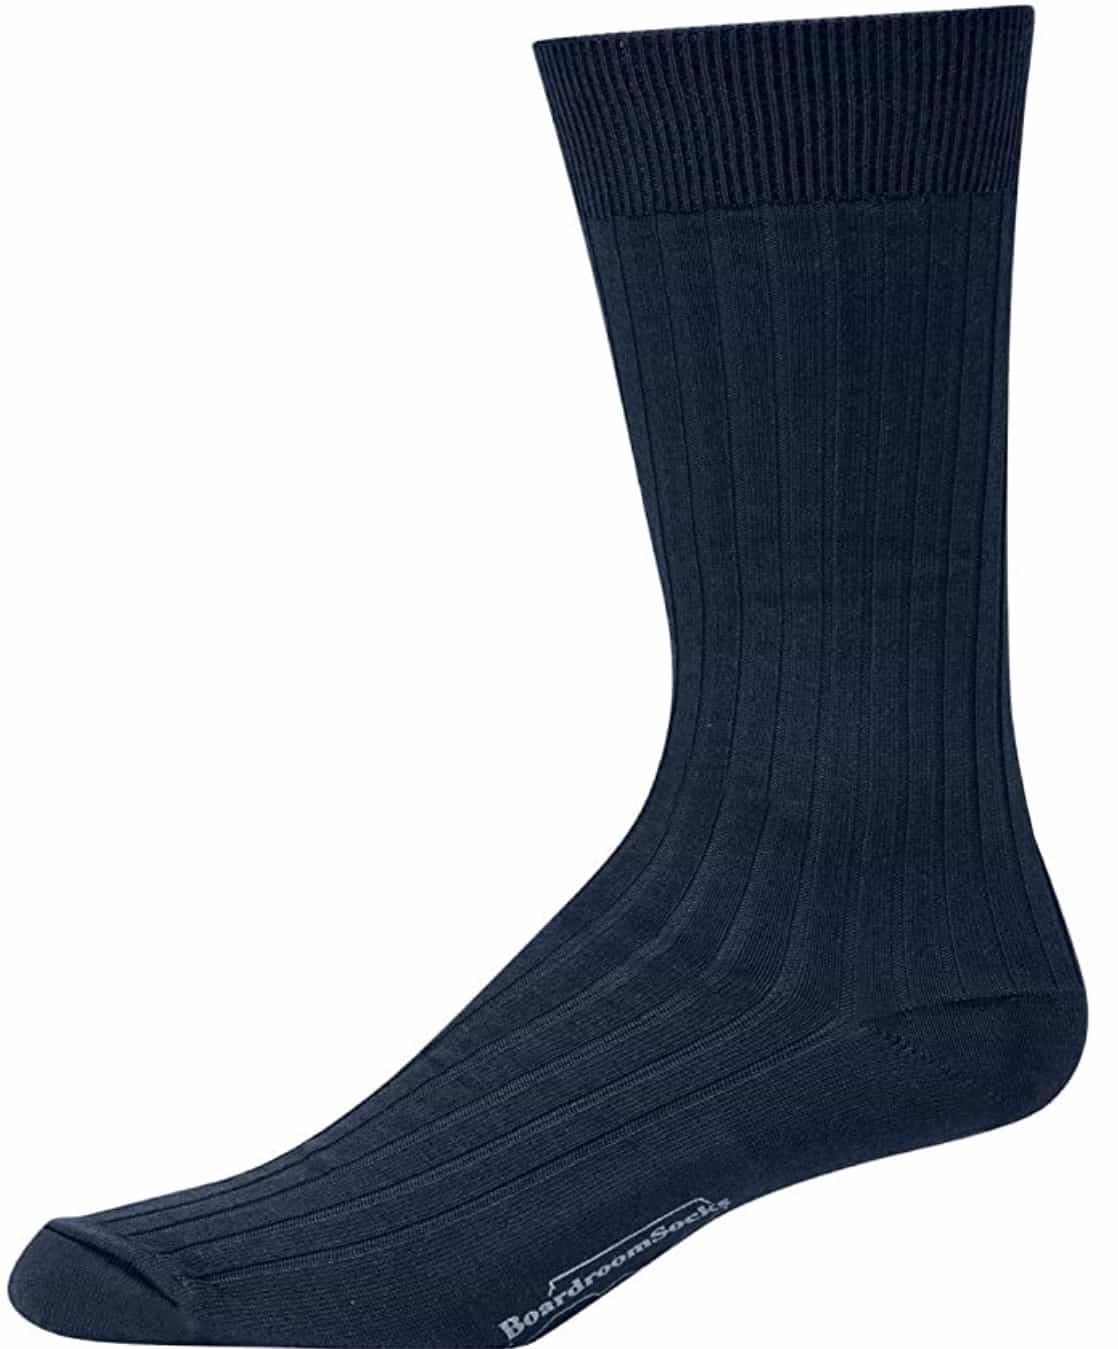 Boardroom Socks Navy Dress Socks